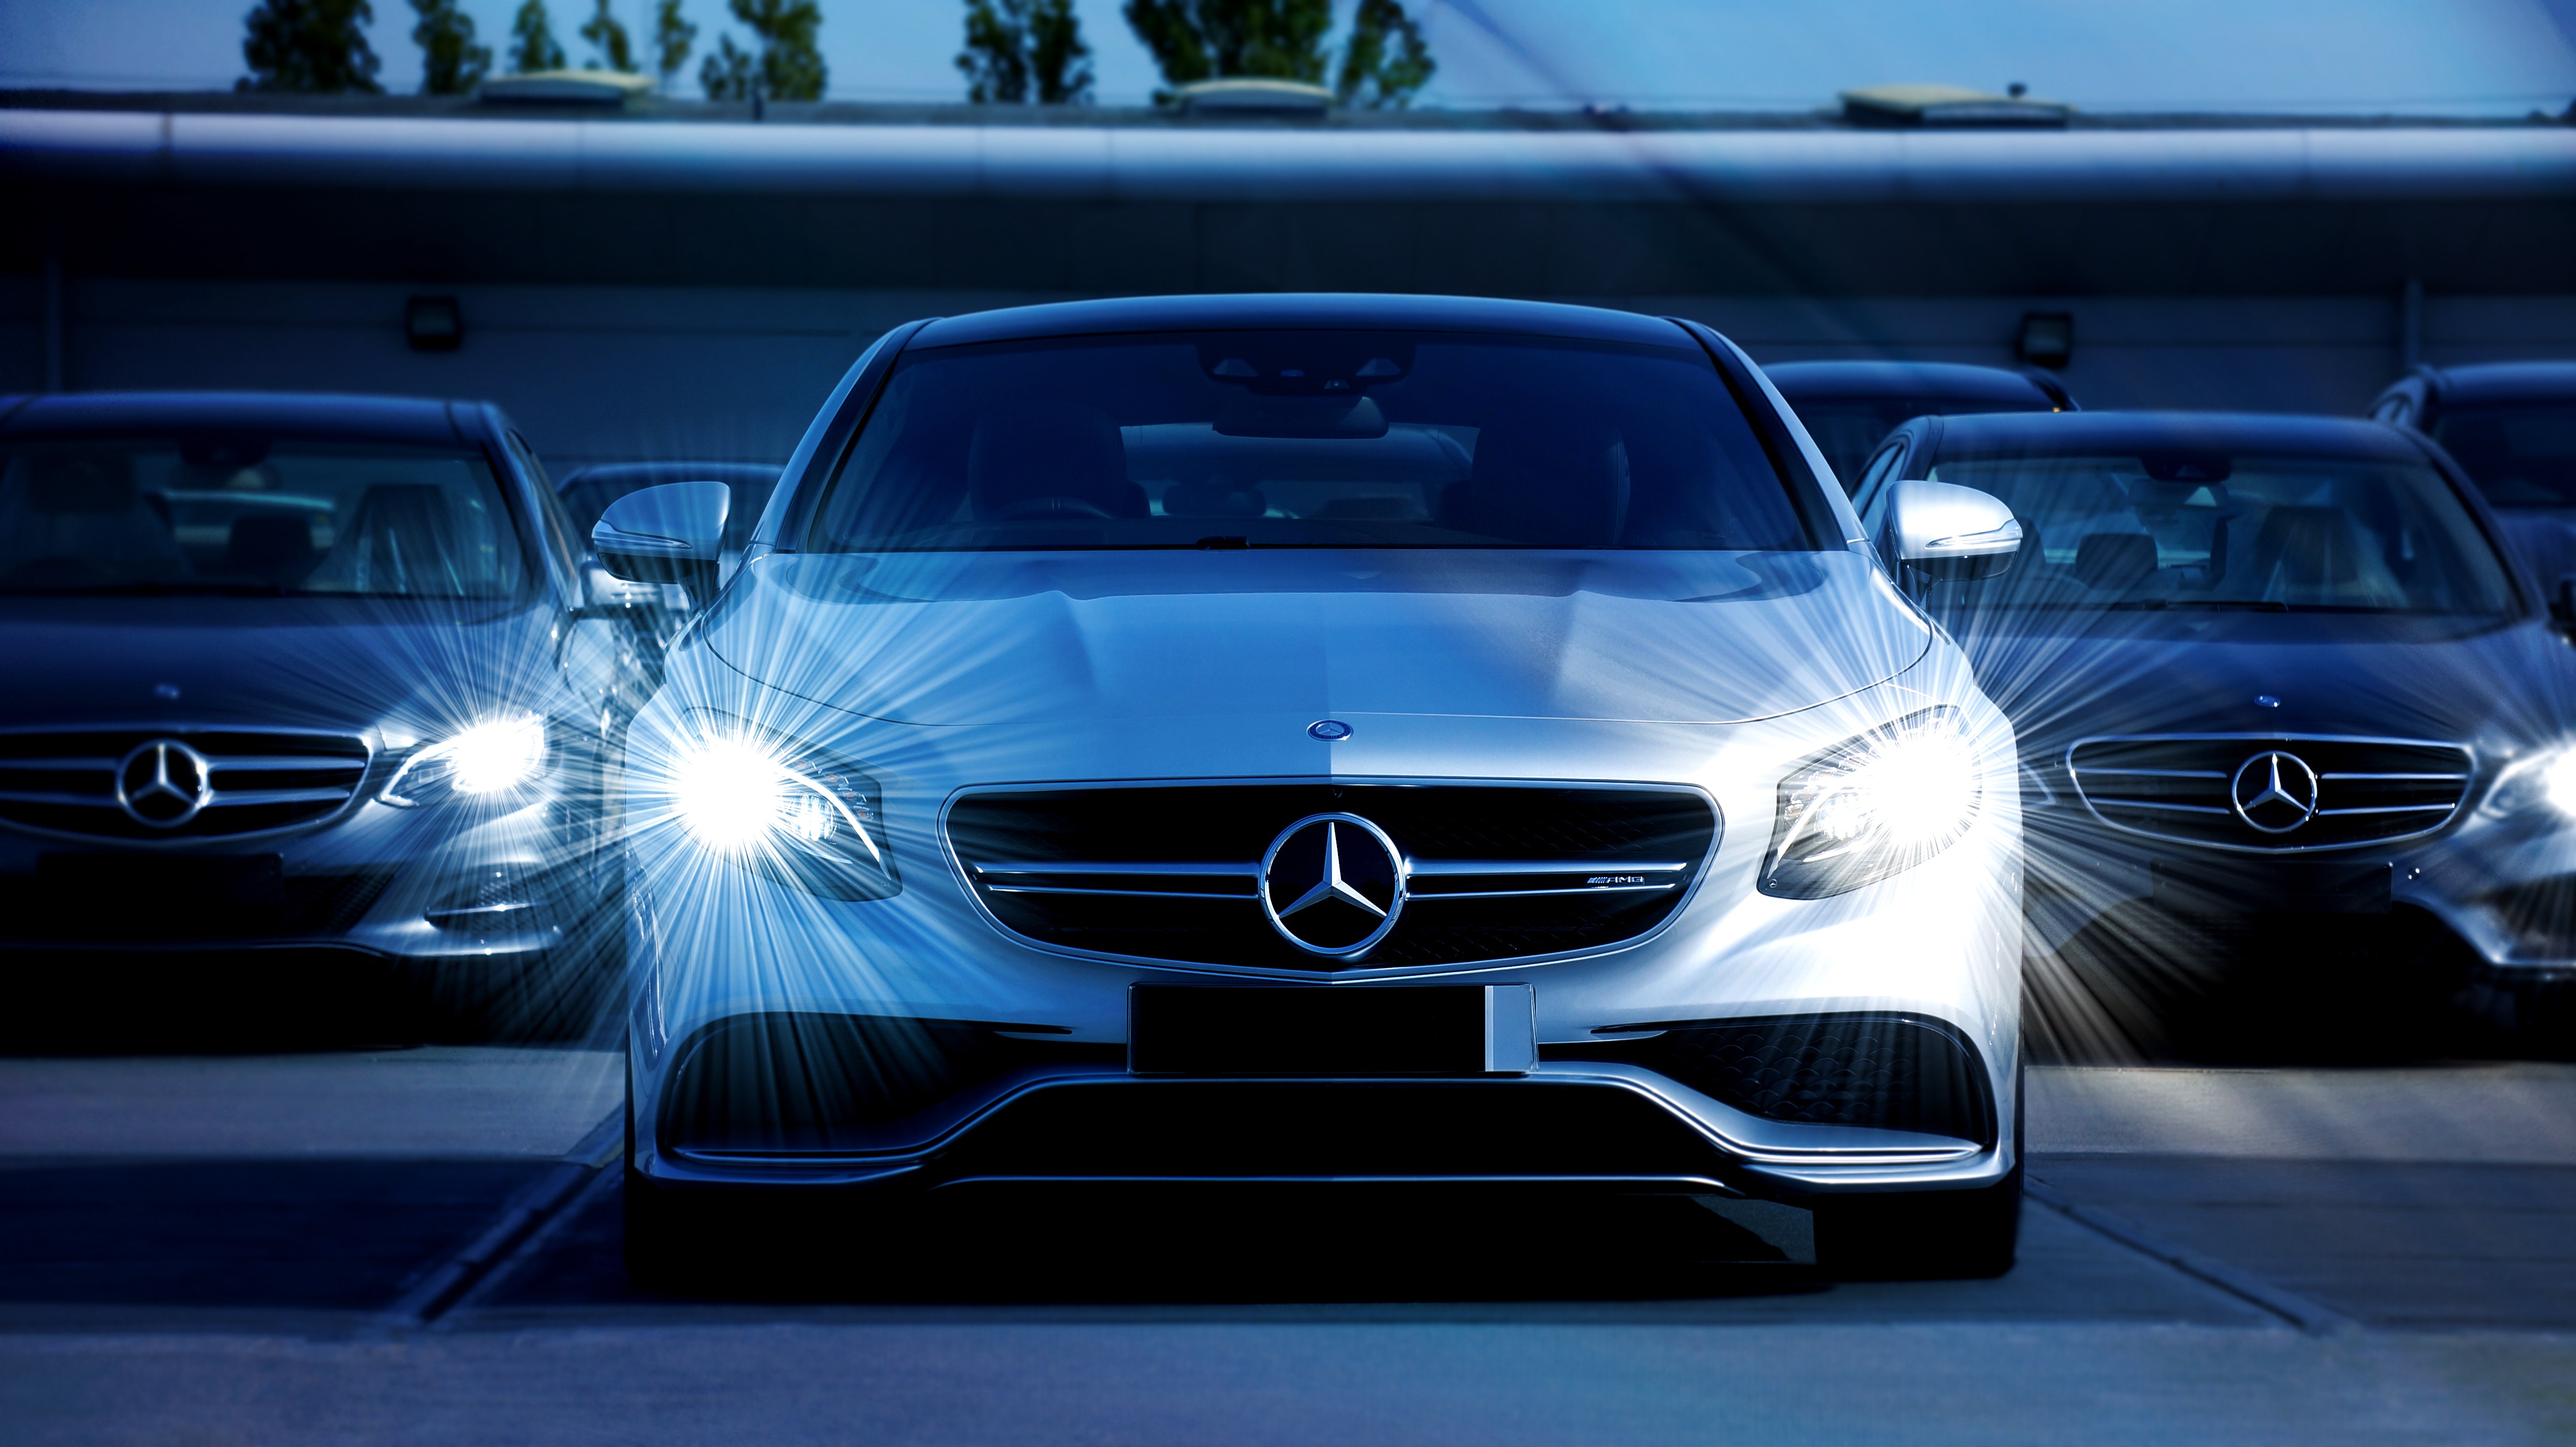 Mercedes Car Image Download